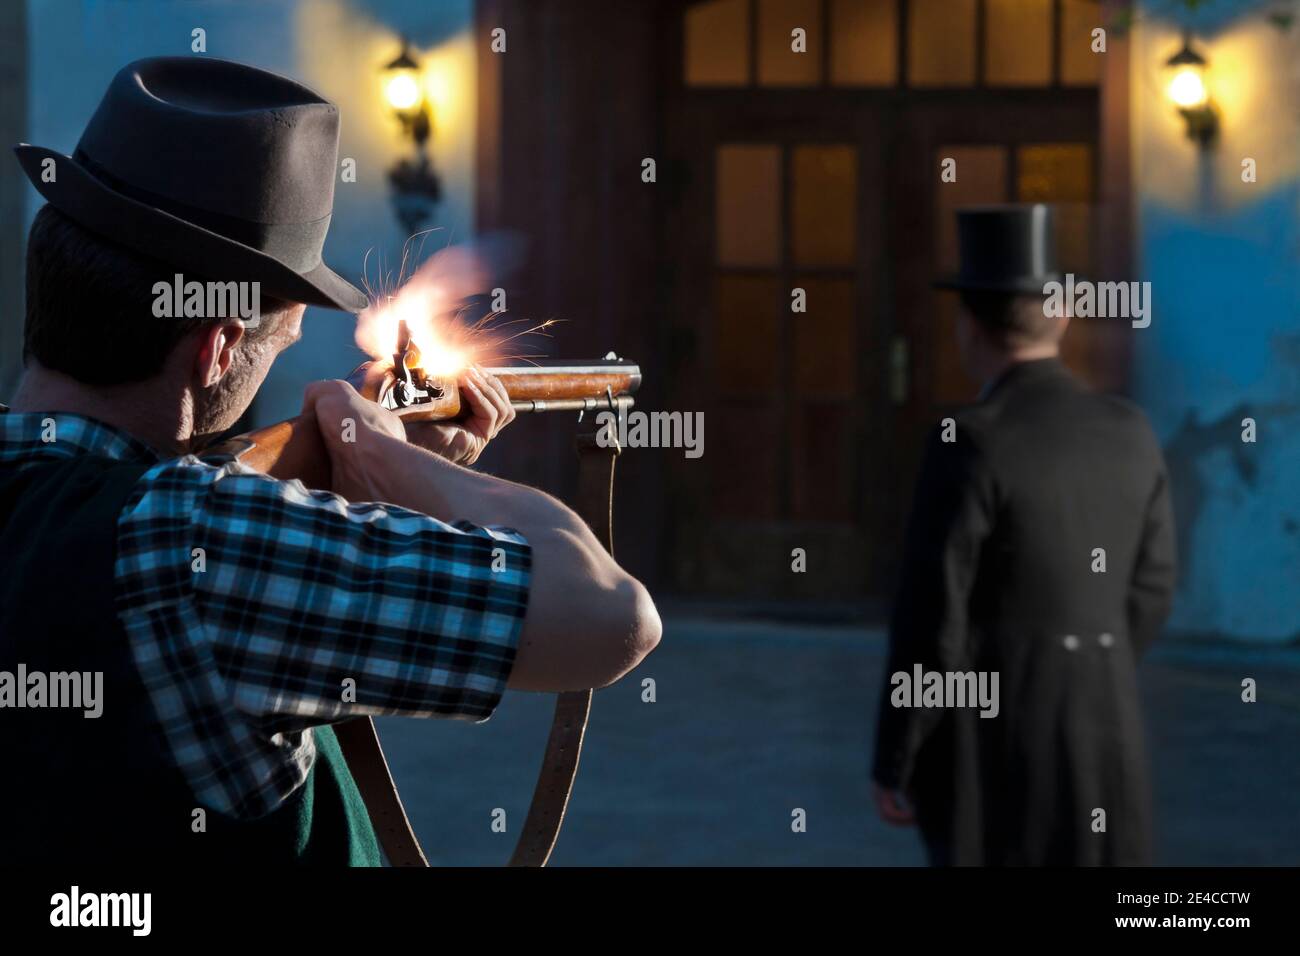 Man shoots from ambush with rifle at passing person Stock Photo